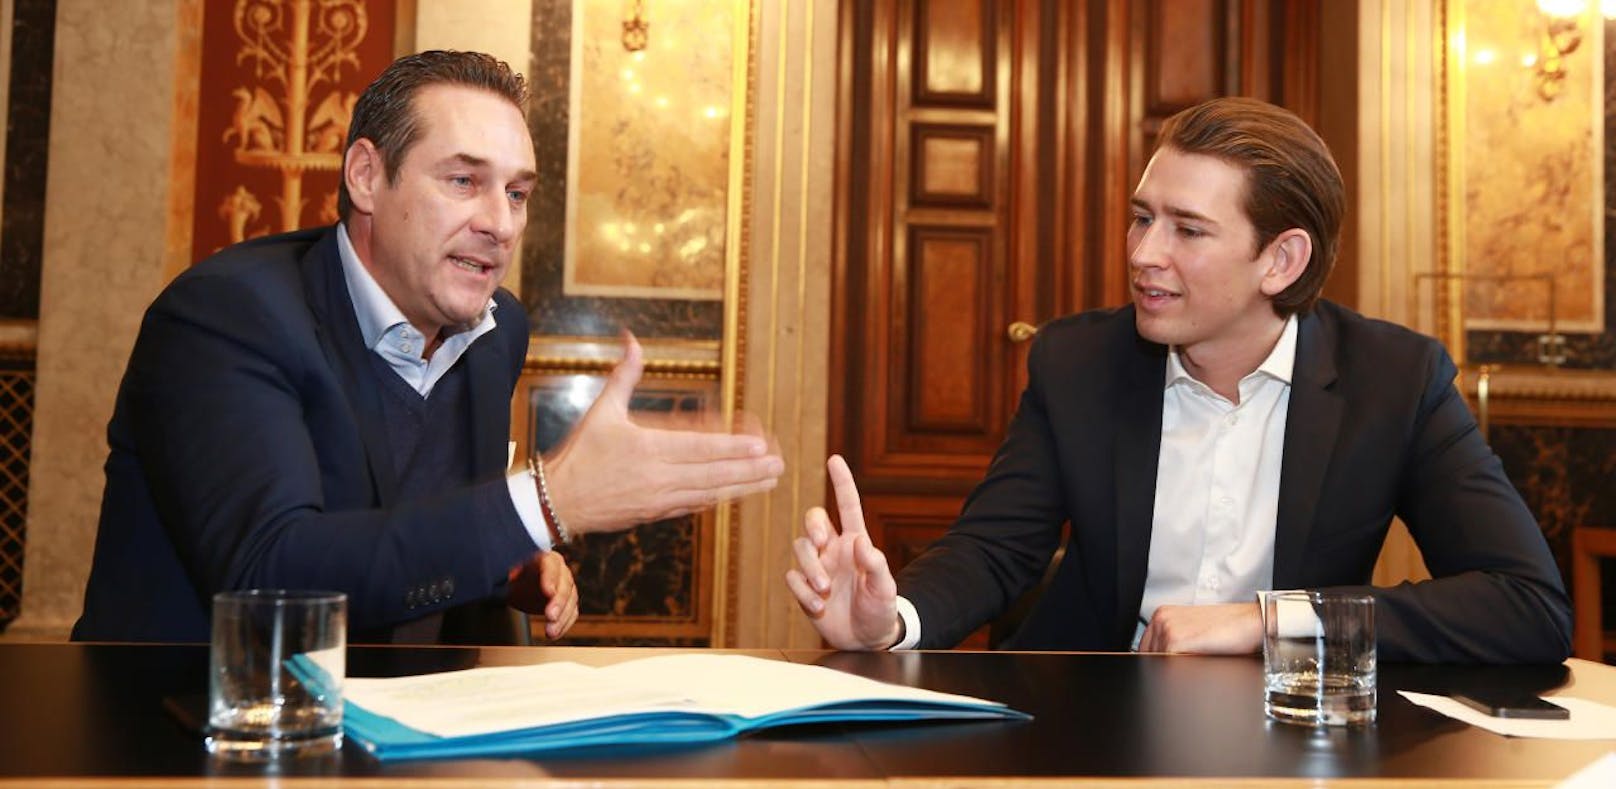 Heinz-Christian Strache (FPÖ) und Sebastian Kurz (ÖVP)